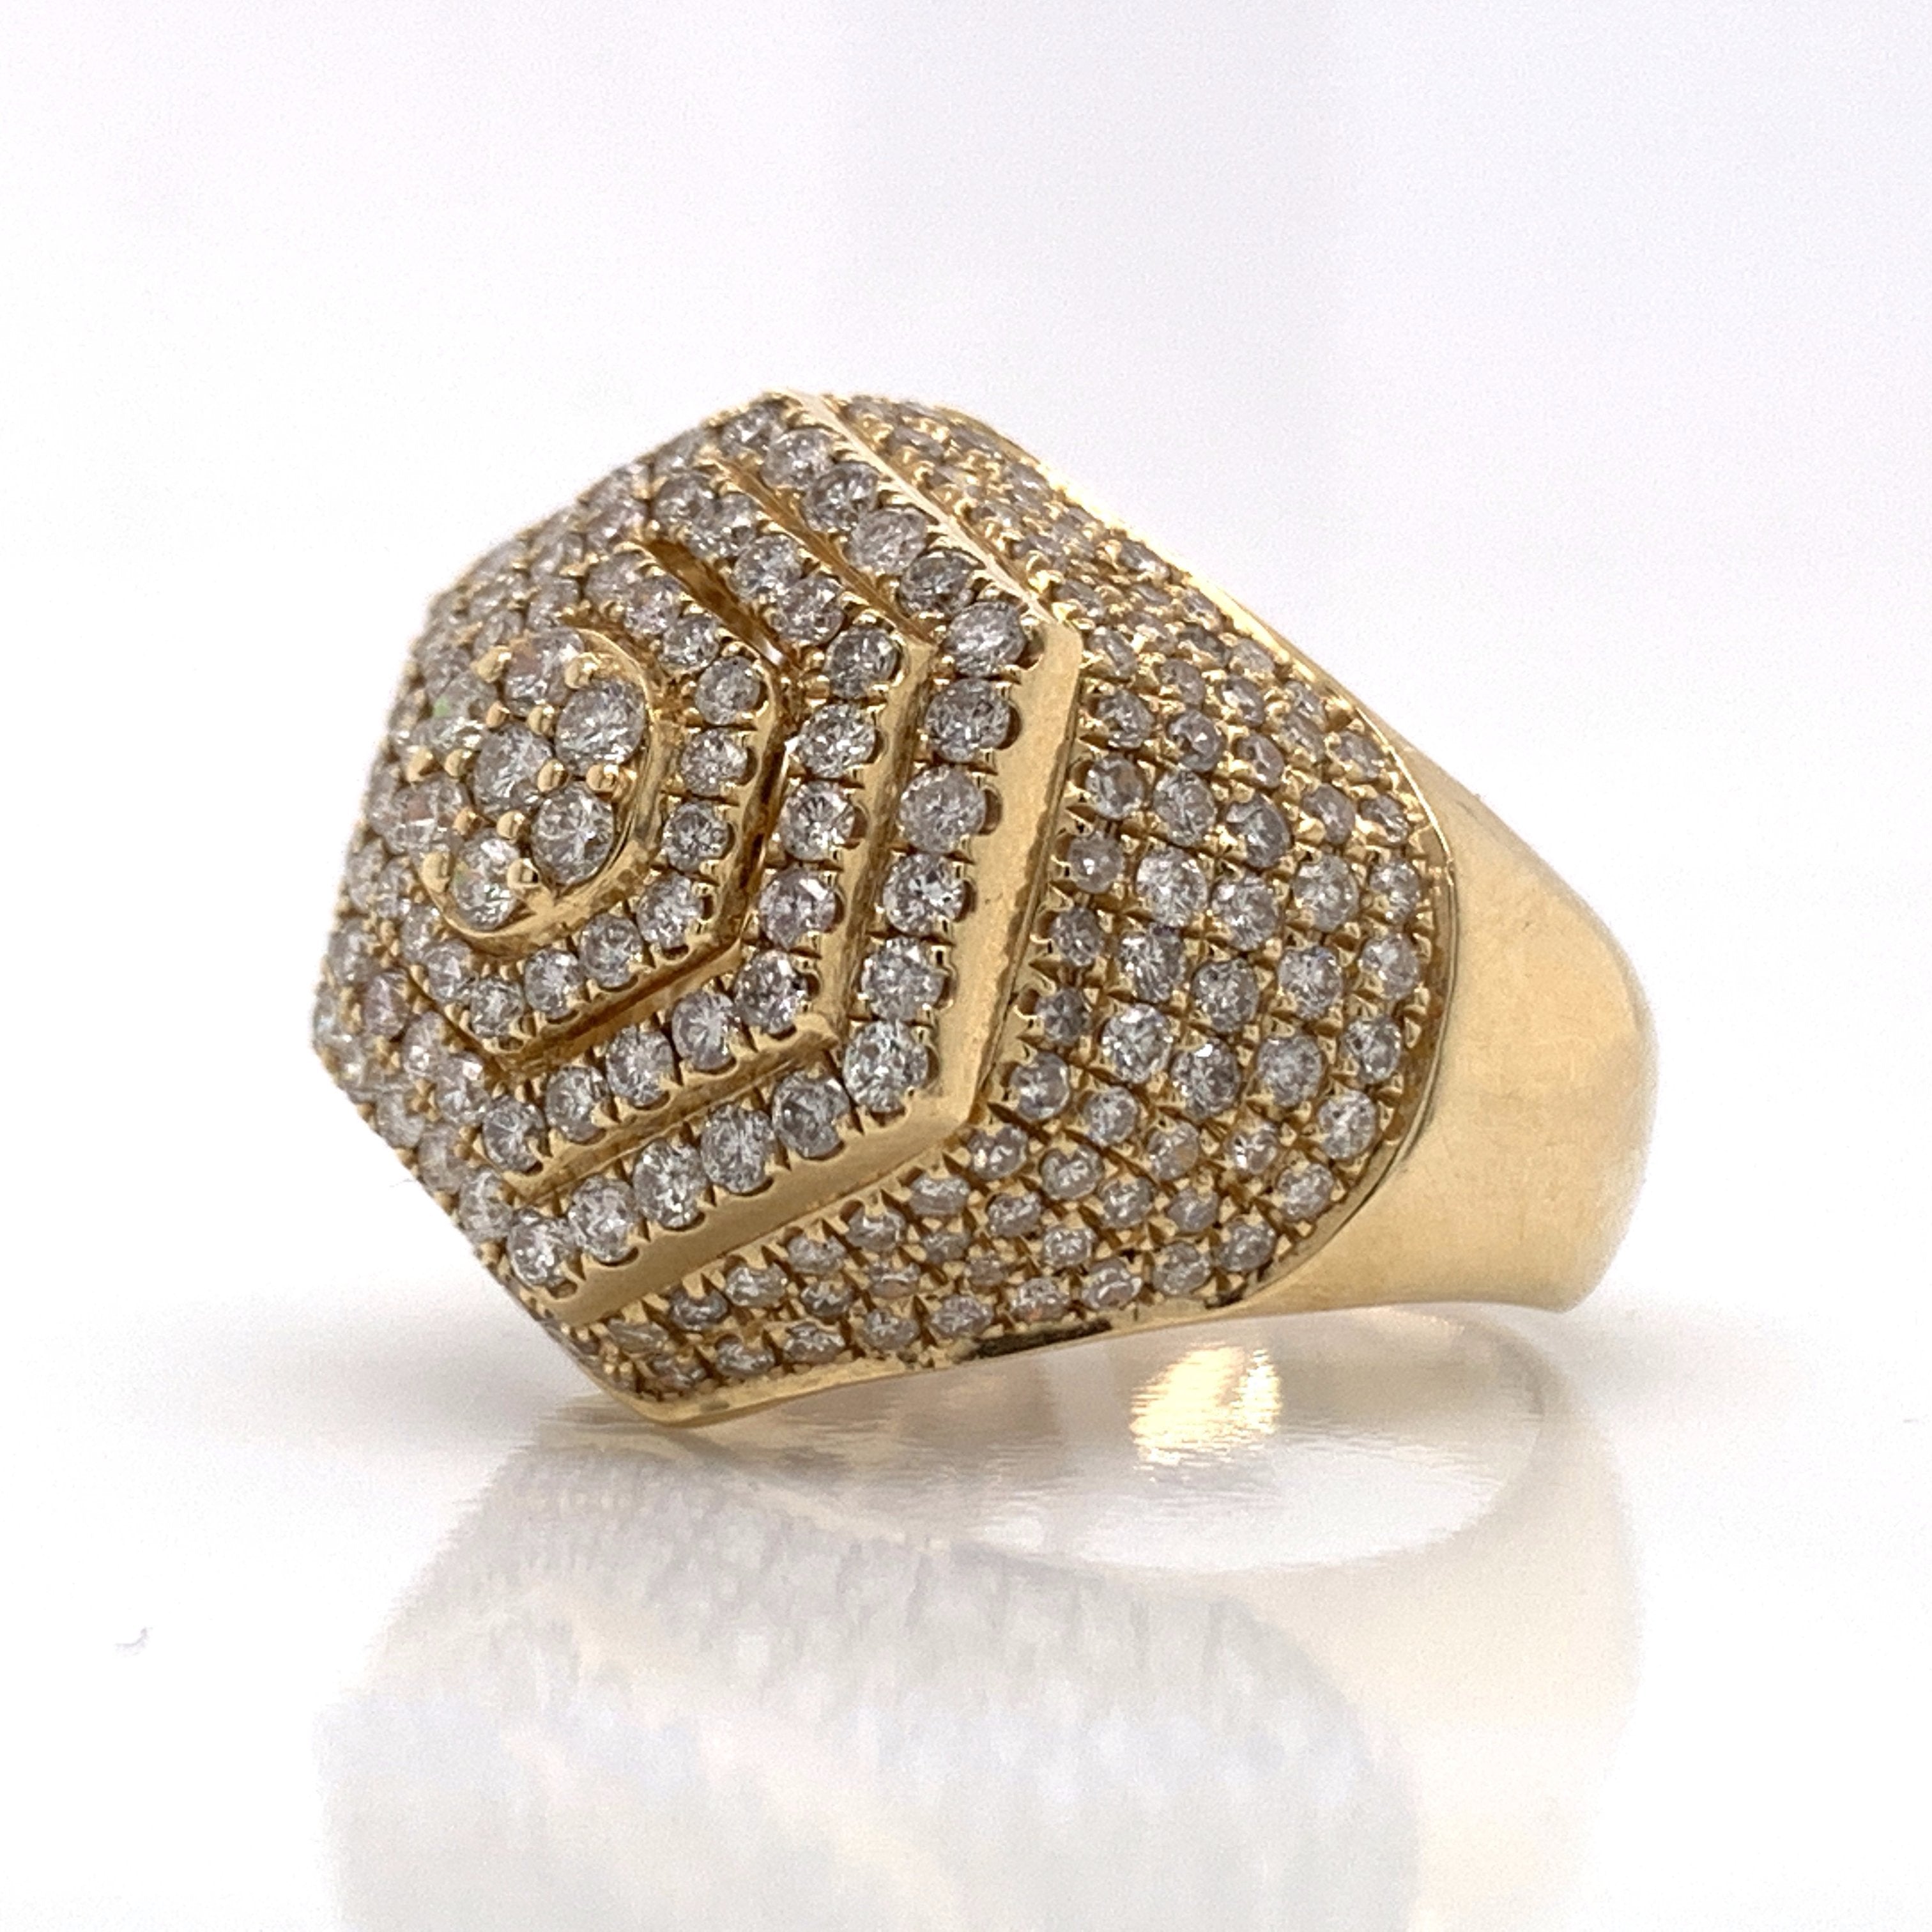 3.00 CT. Diamond 14K Gold Ring - White Carat Diamonds 